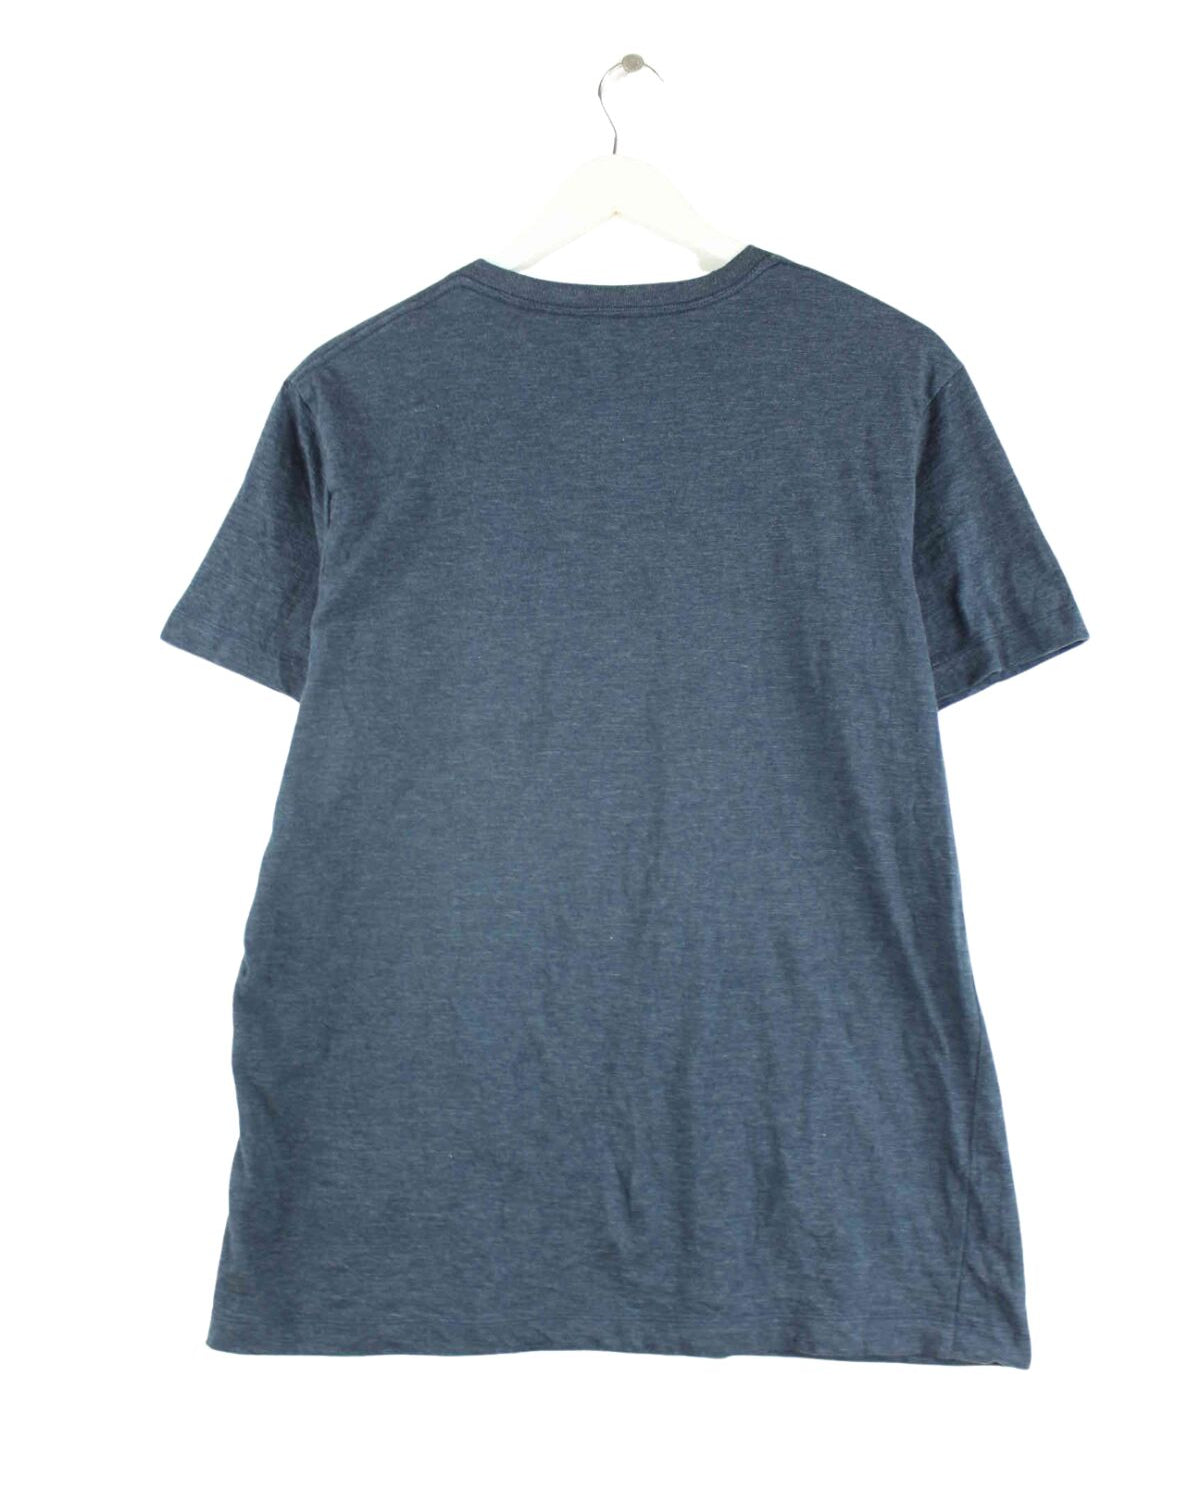 Levi's Basic T-Shirt Blau L (back image)